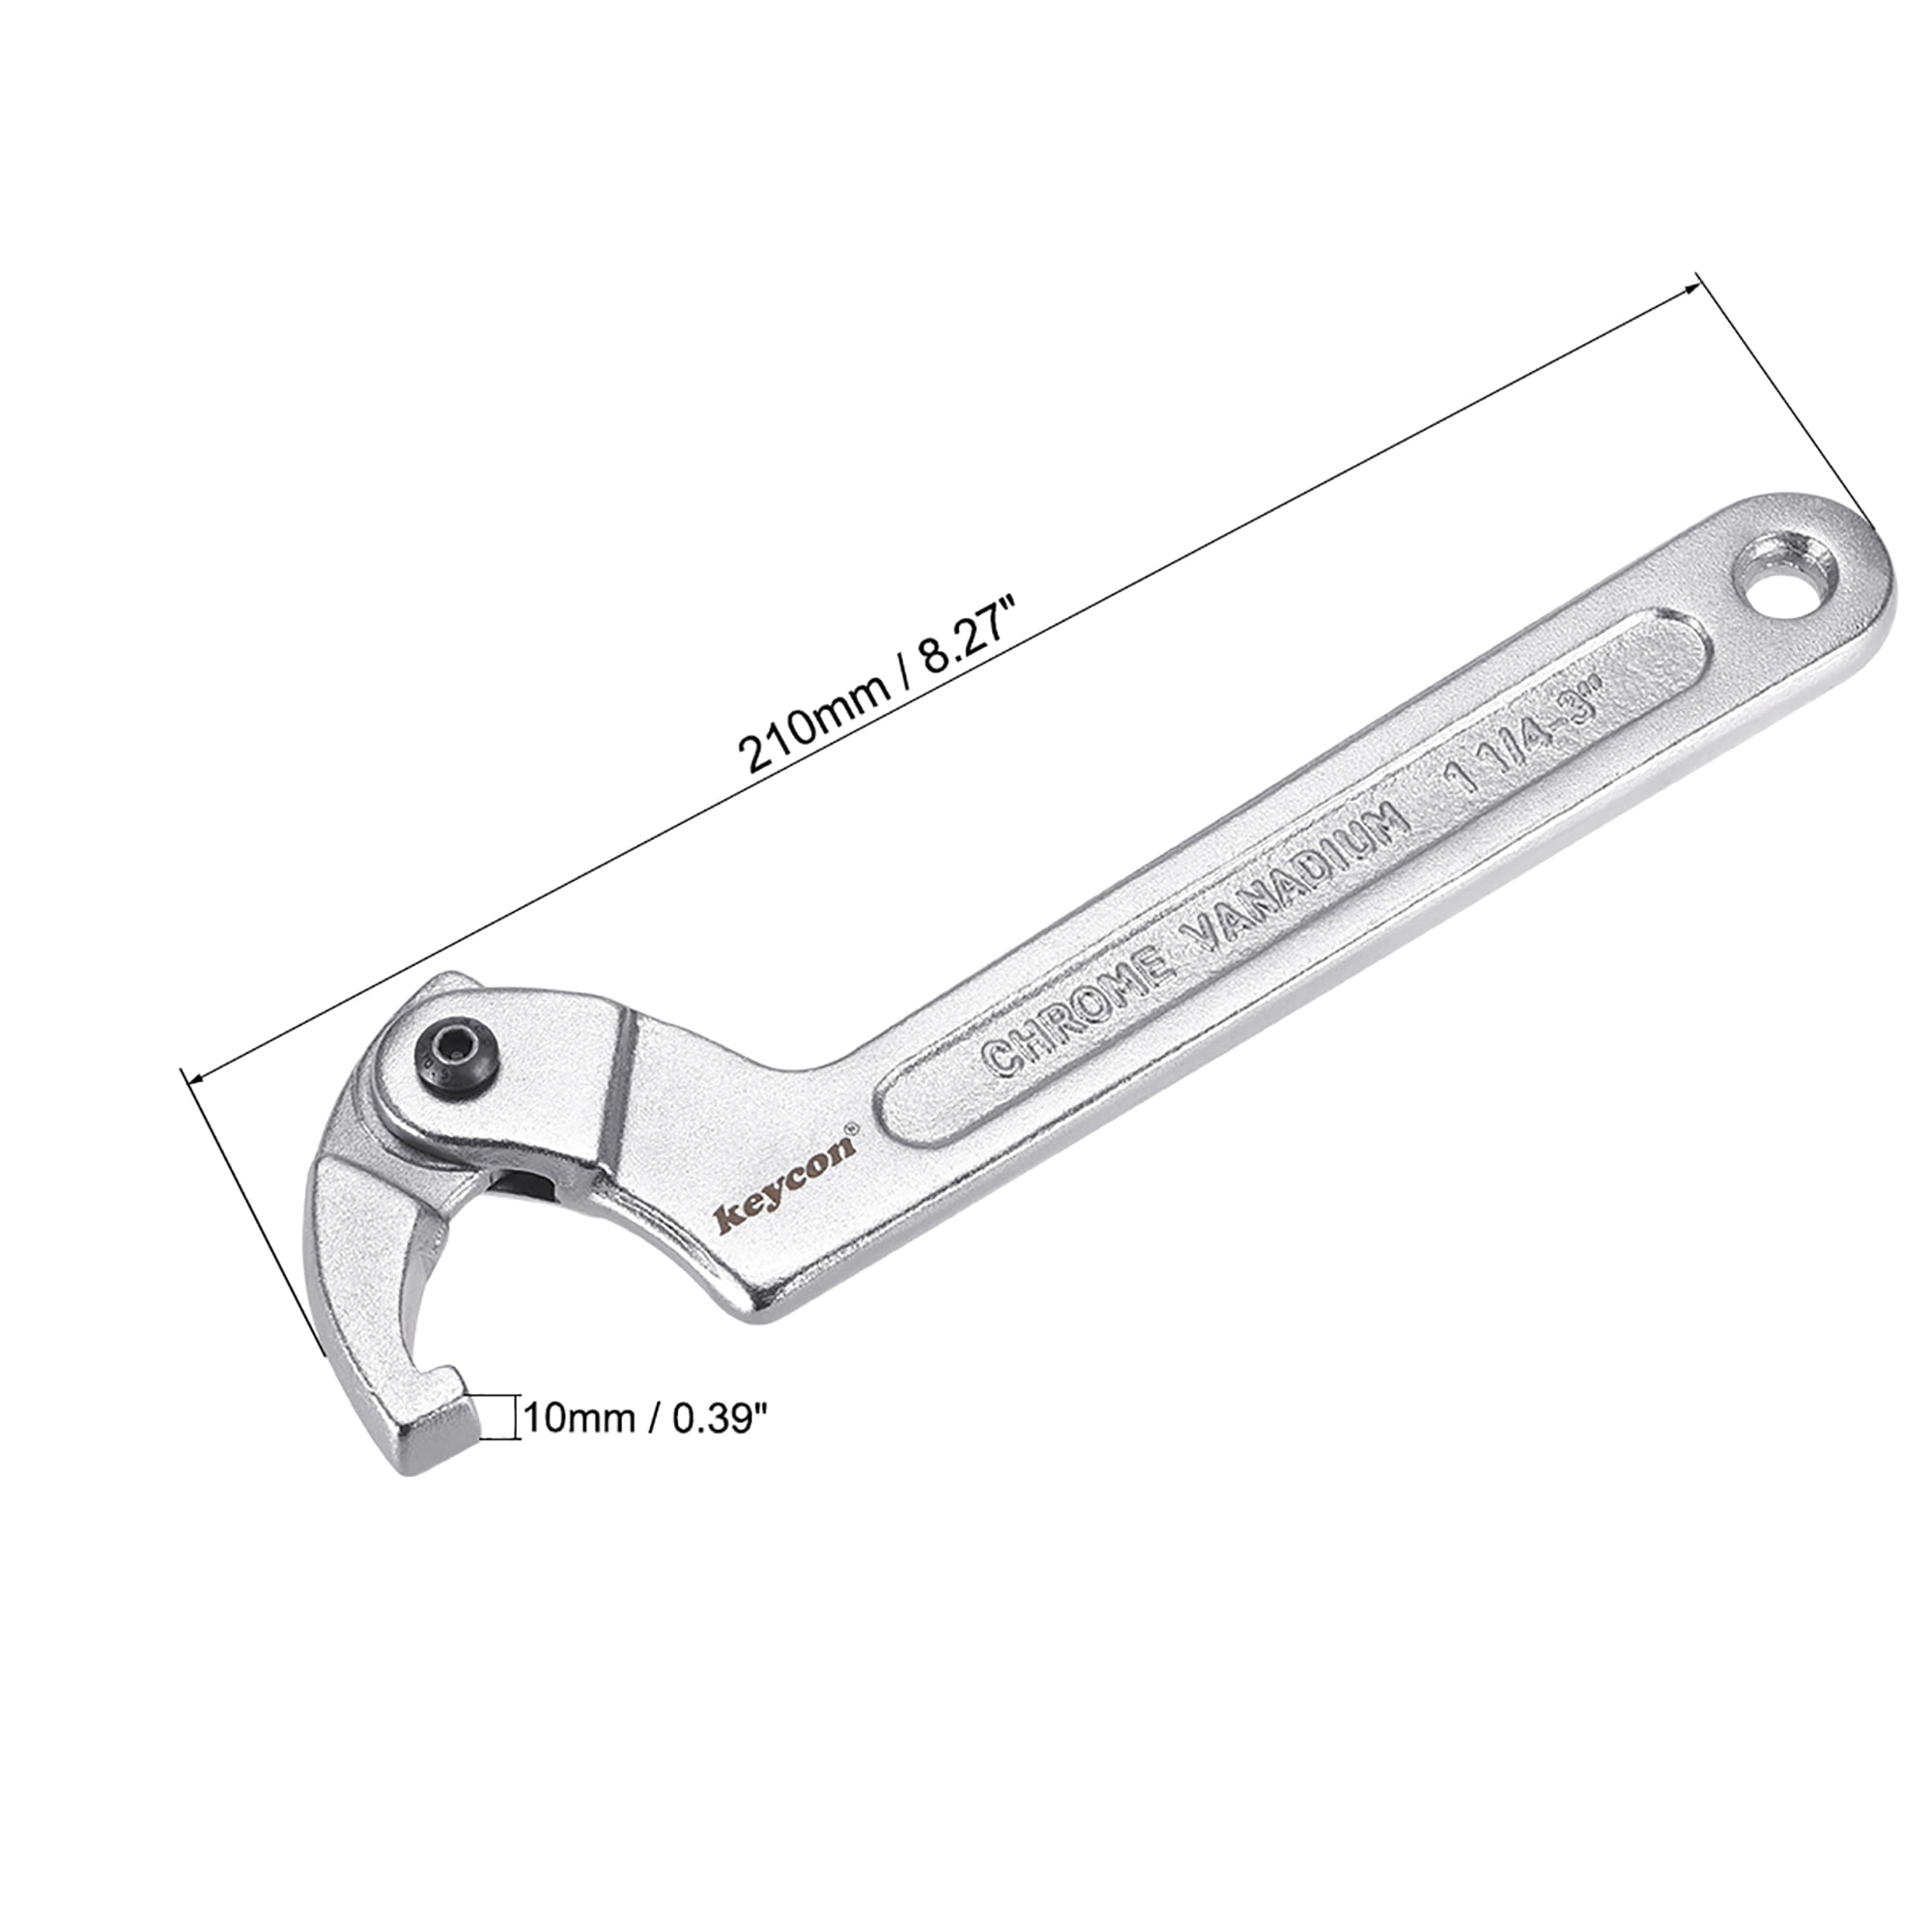 Square Nose Utoolmart C Spanner Tool Chrome Vanadium Adjustable Hook Wrench 1 1/4-3 Inch 32-76mm 1pcs 